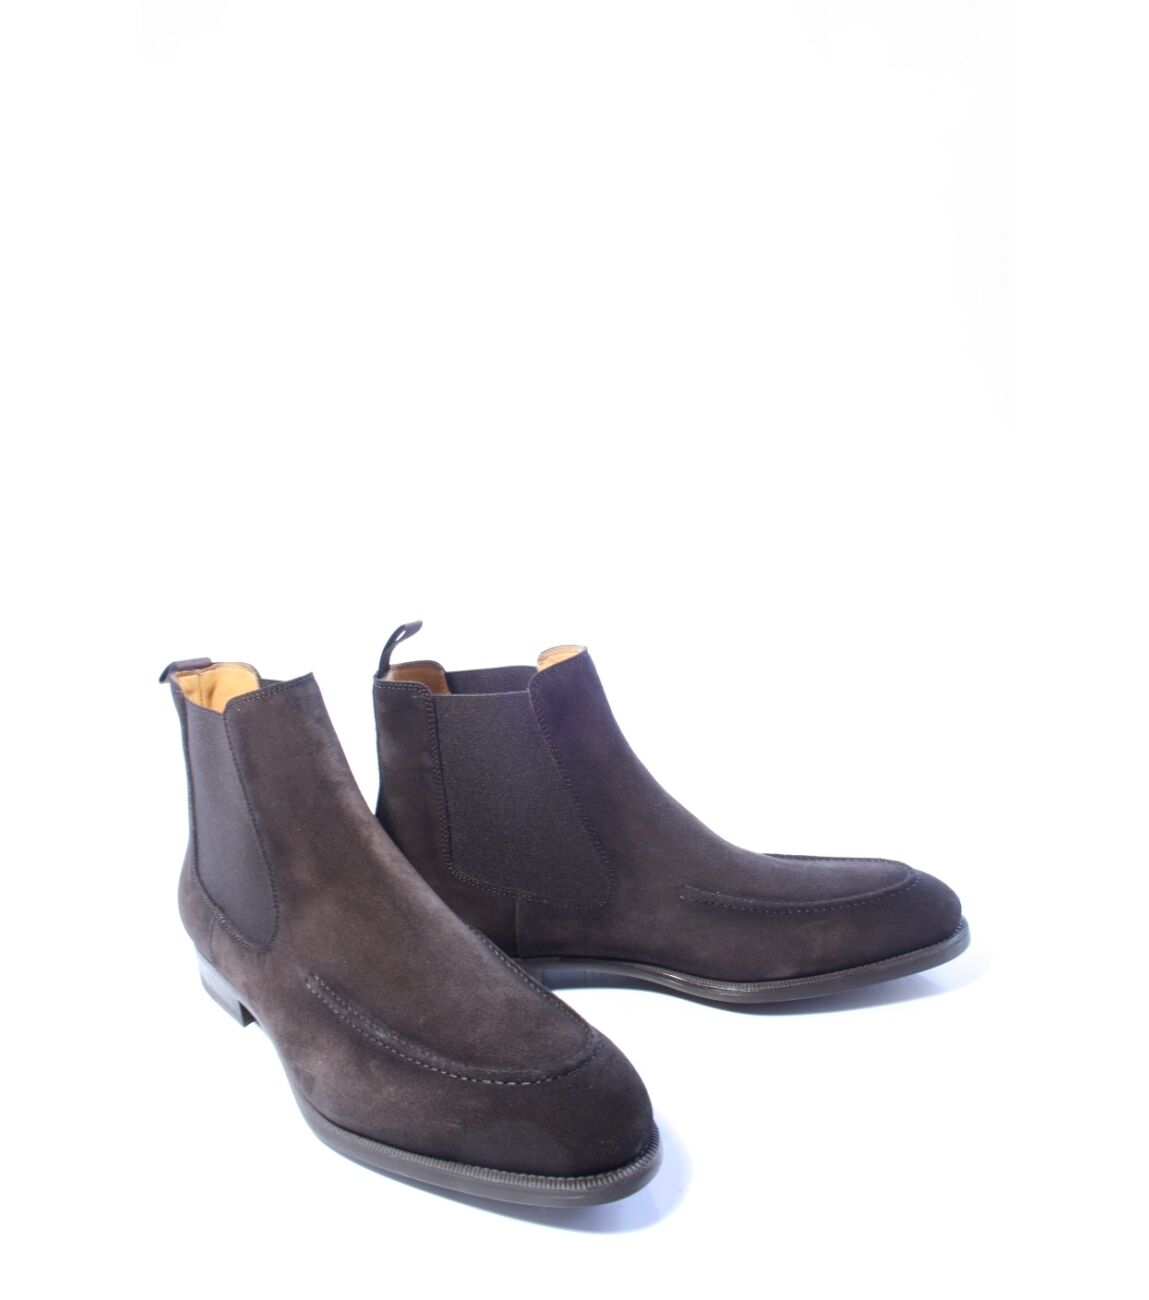 Magnanni Heren boots gekleed bruin 44.5